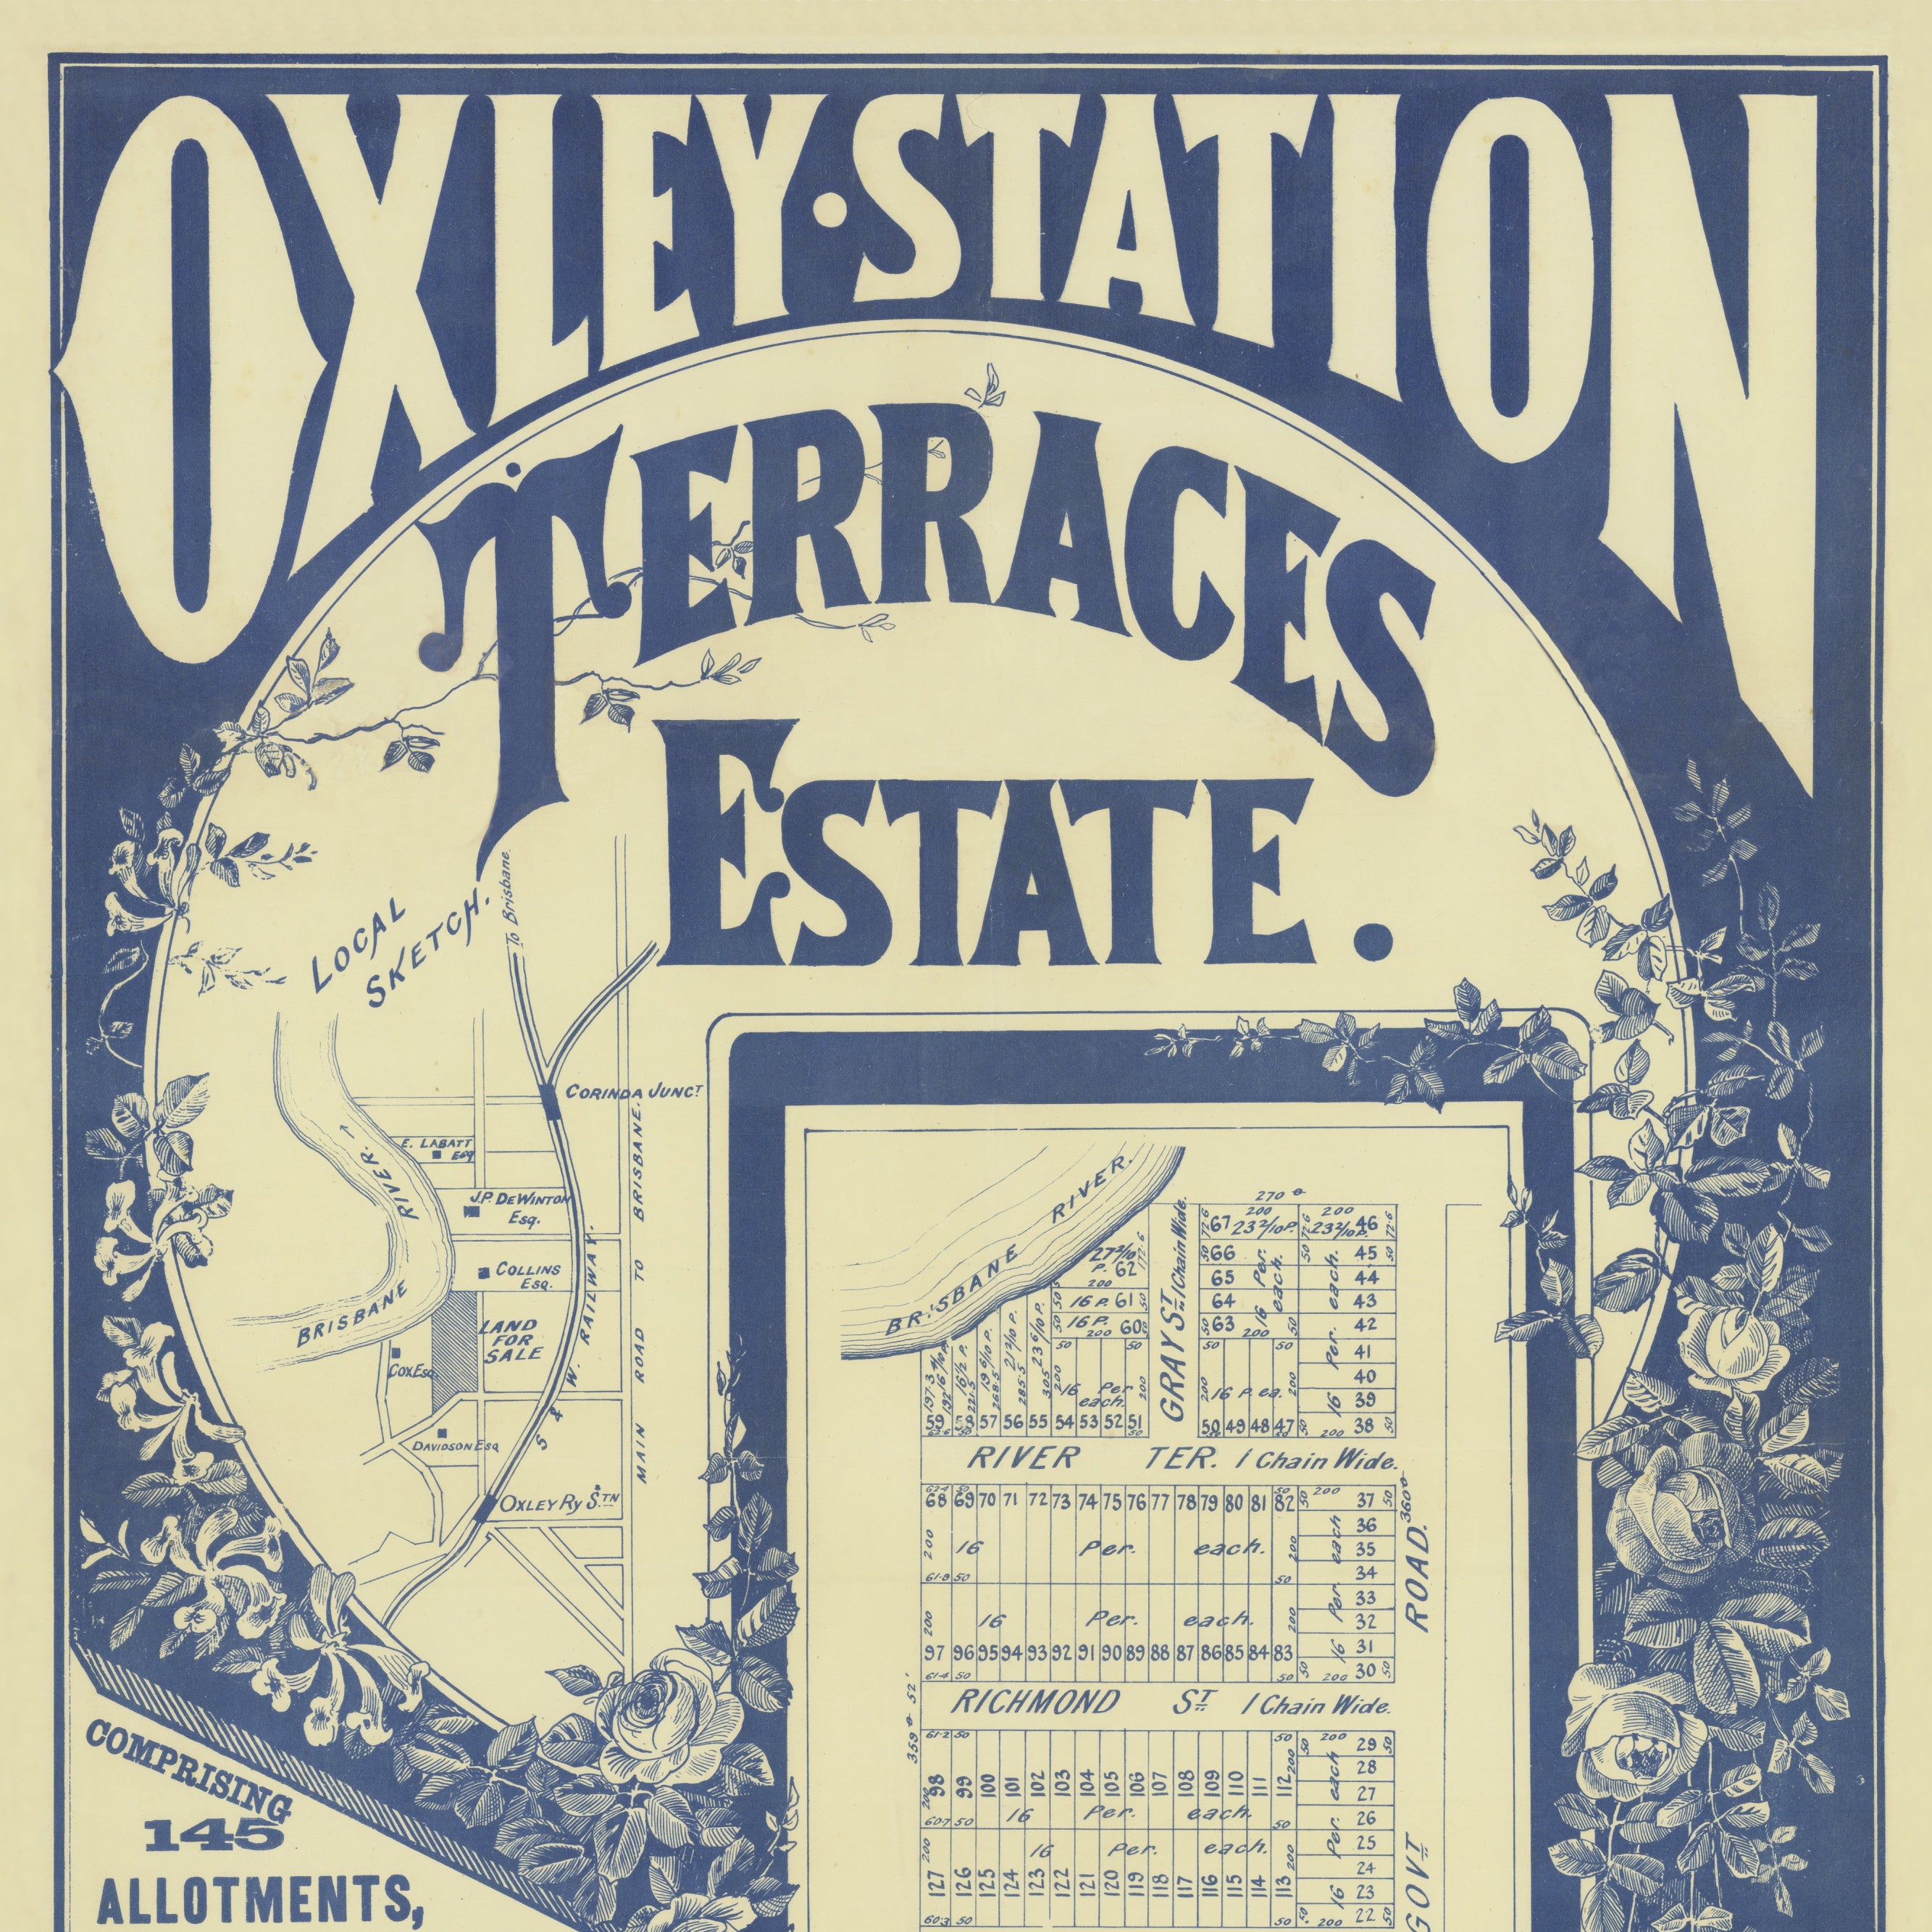 1889 Corinda - Oxley Station Terraces Estate